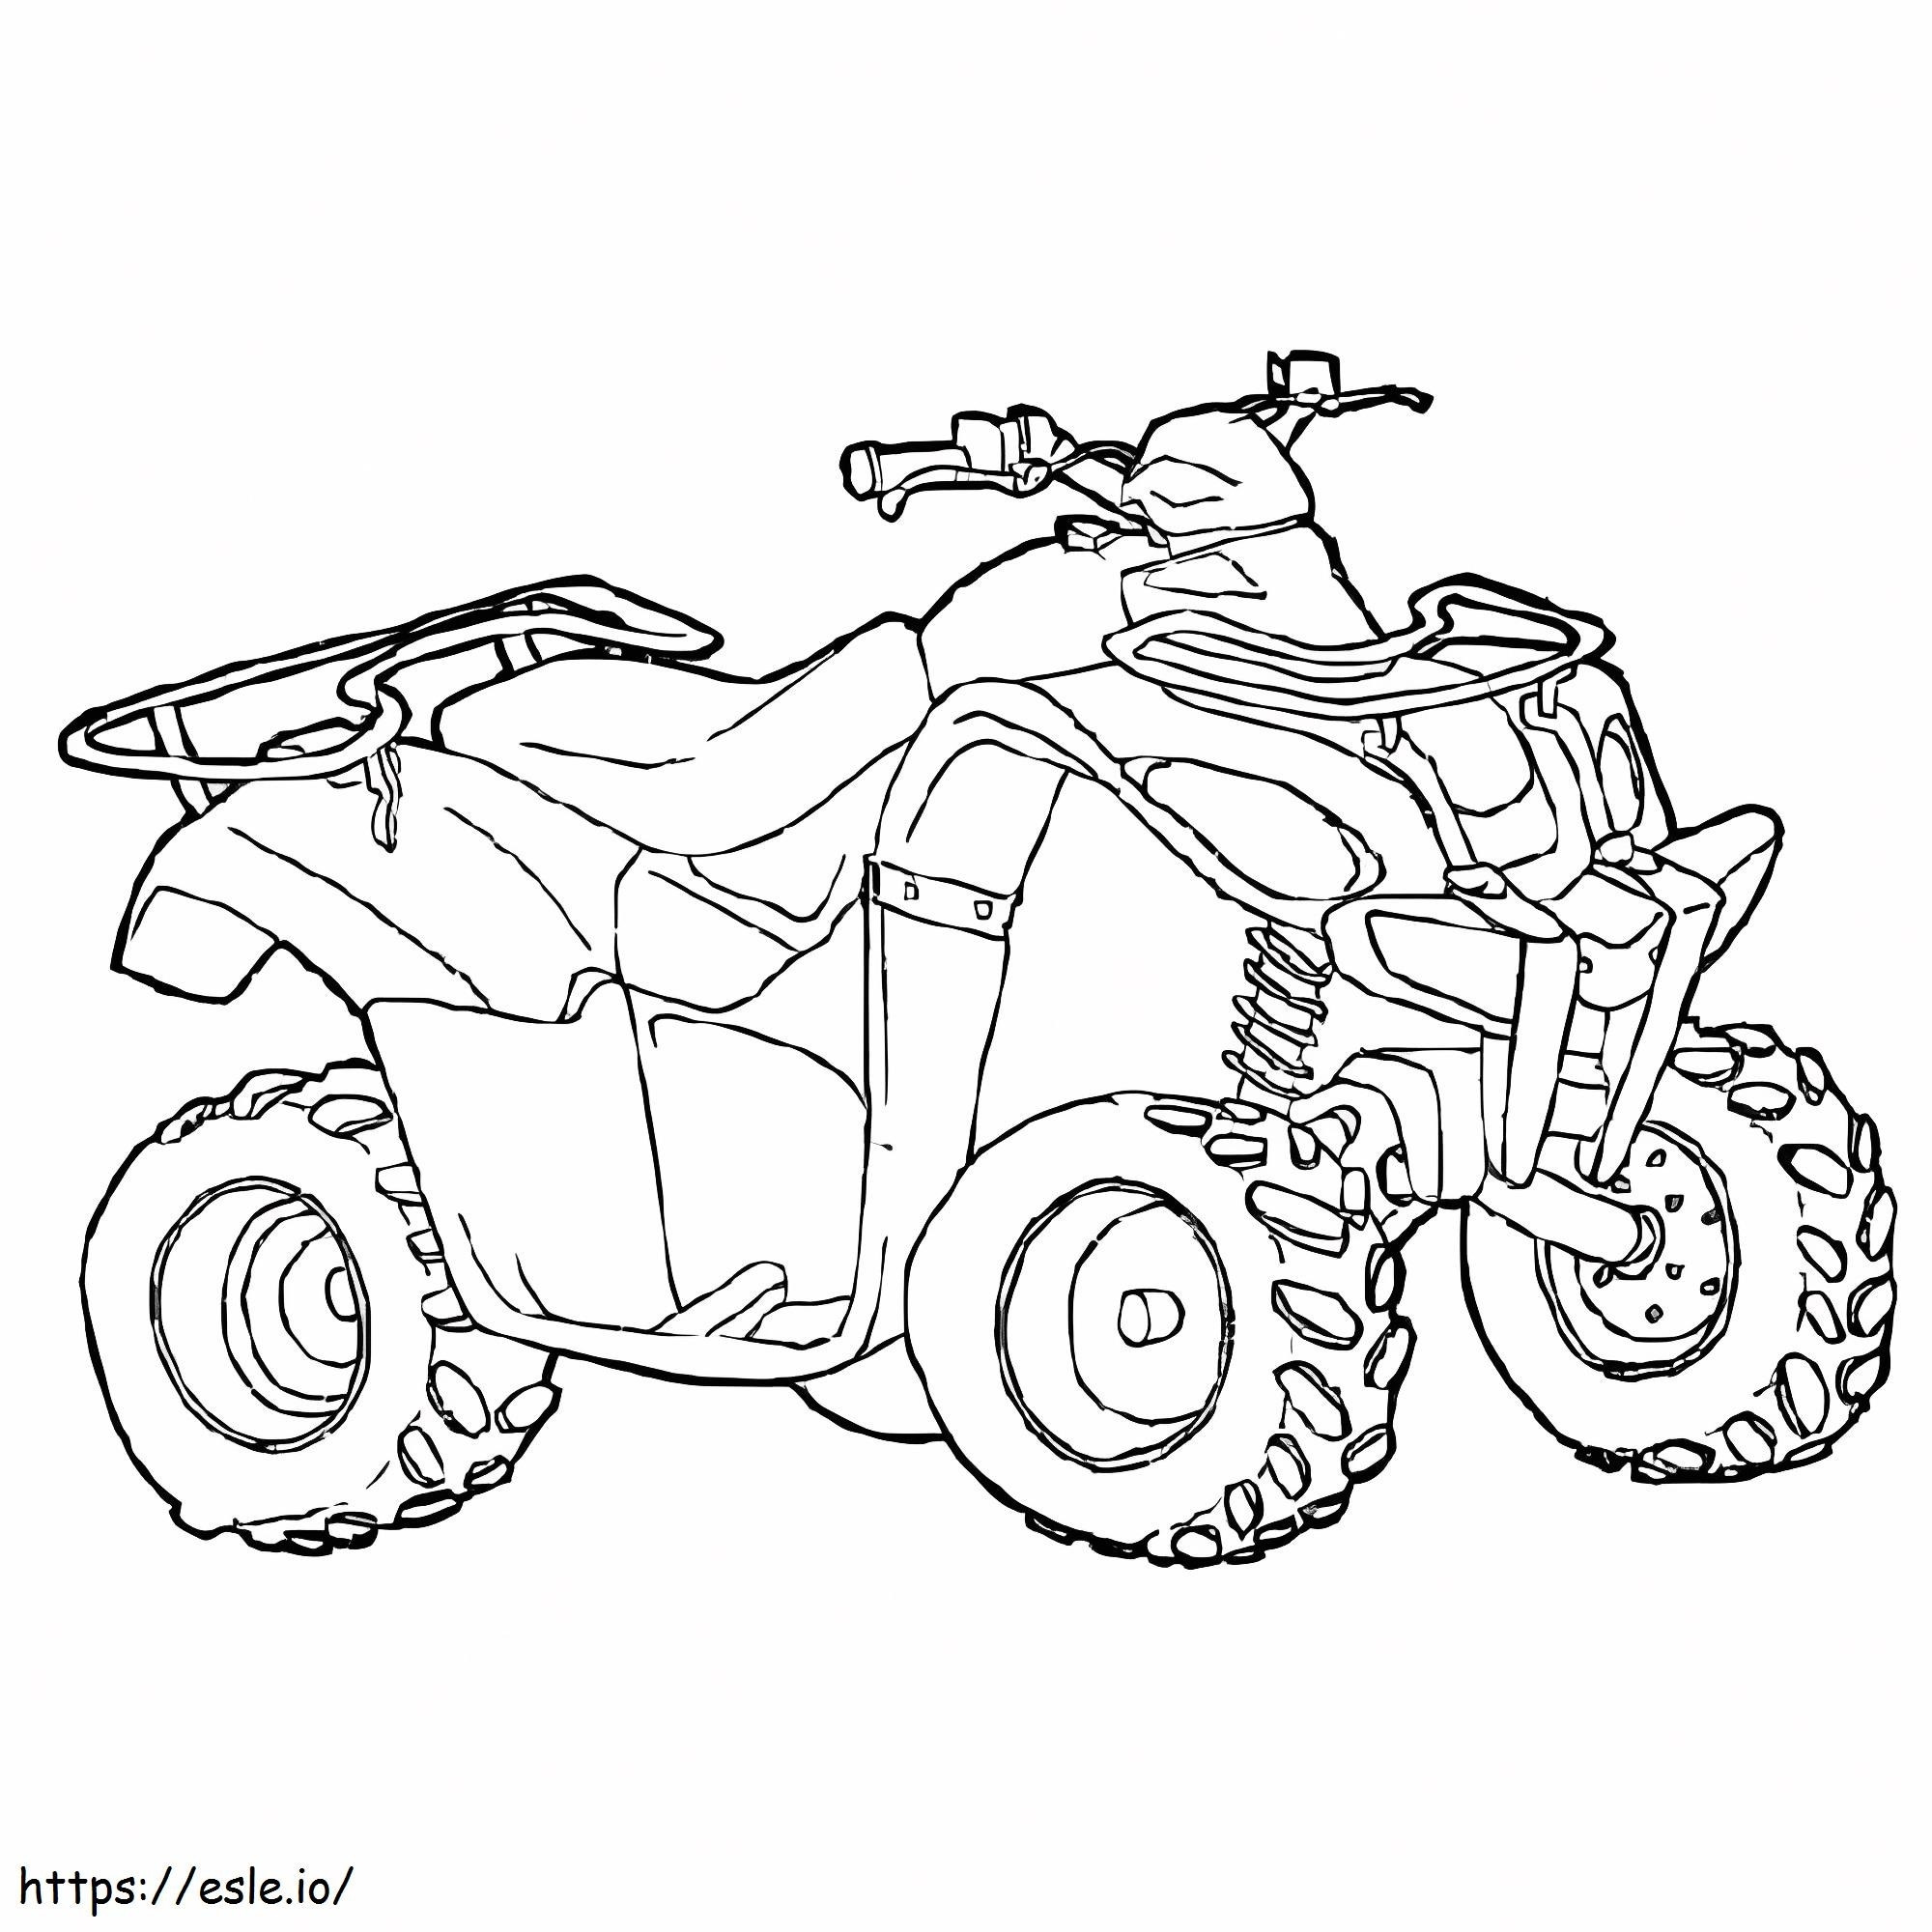 Veículo todo-o-terreno ATV para colorir